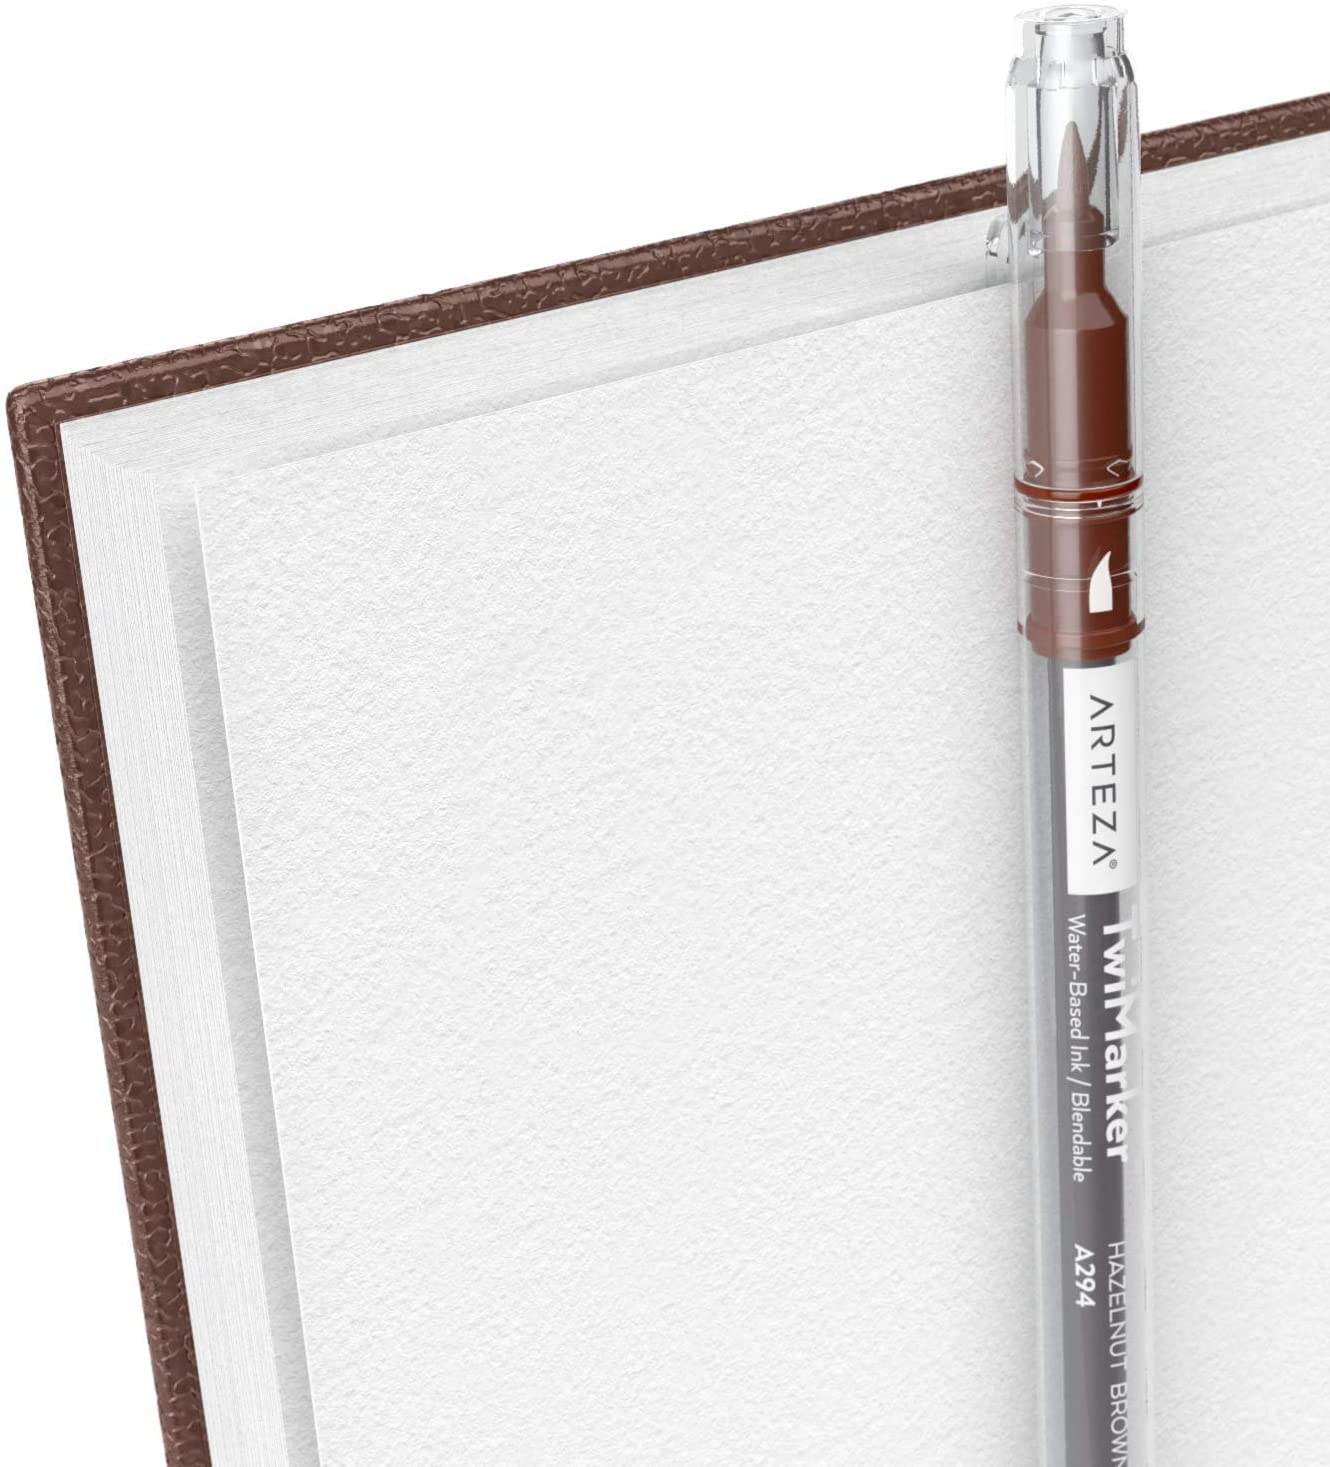 Sketchbook Spiral-Bound Hardcover Brown 5.5x8.5” - Pack of 3